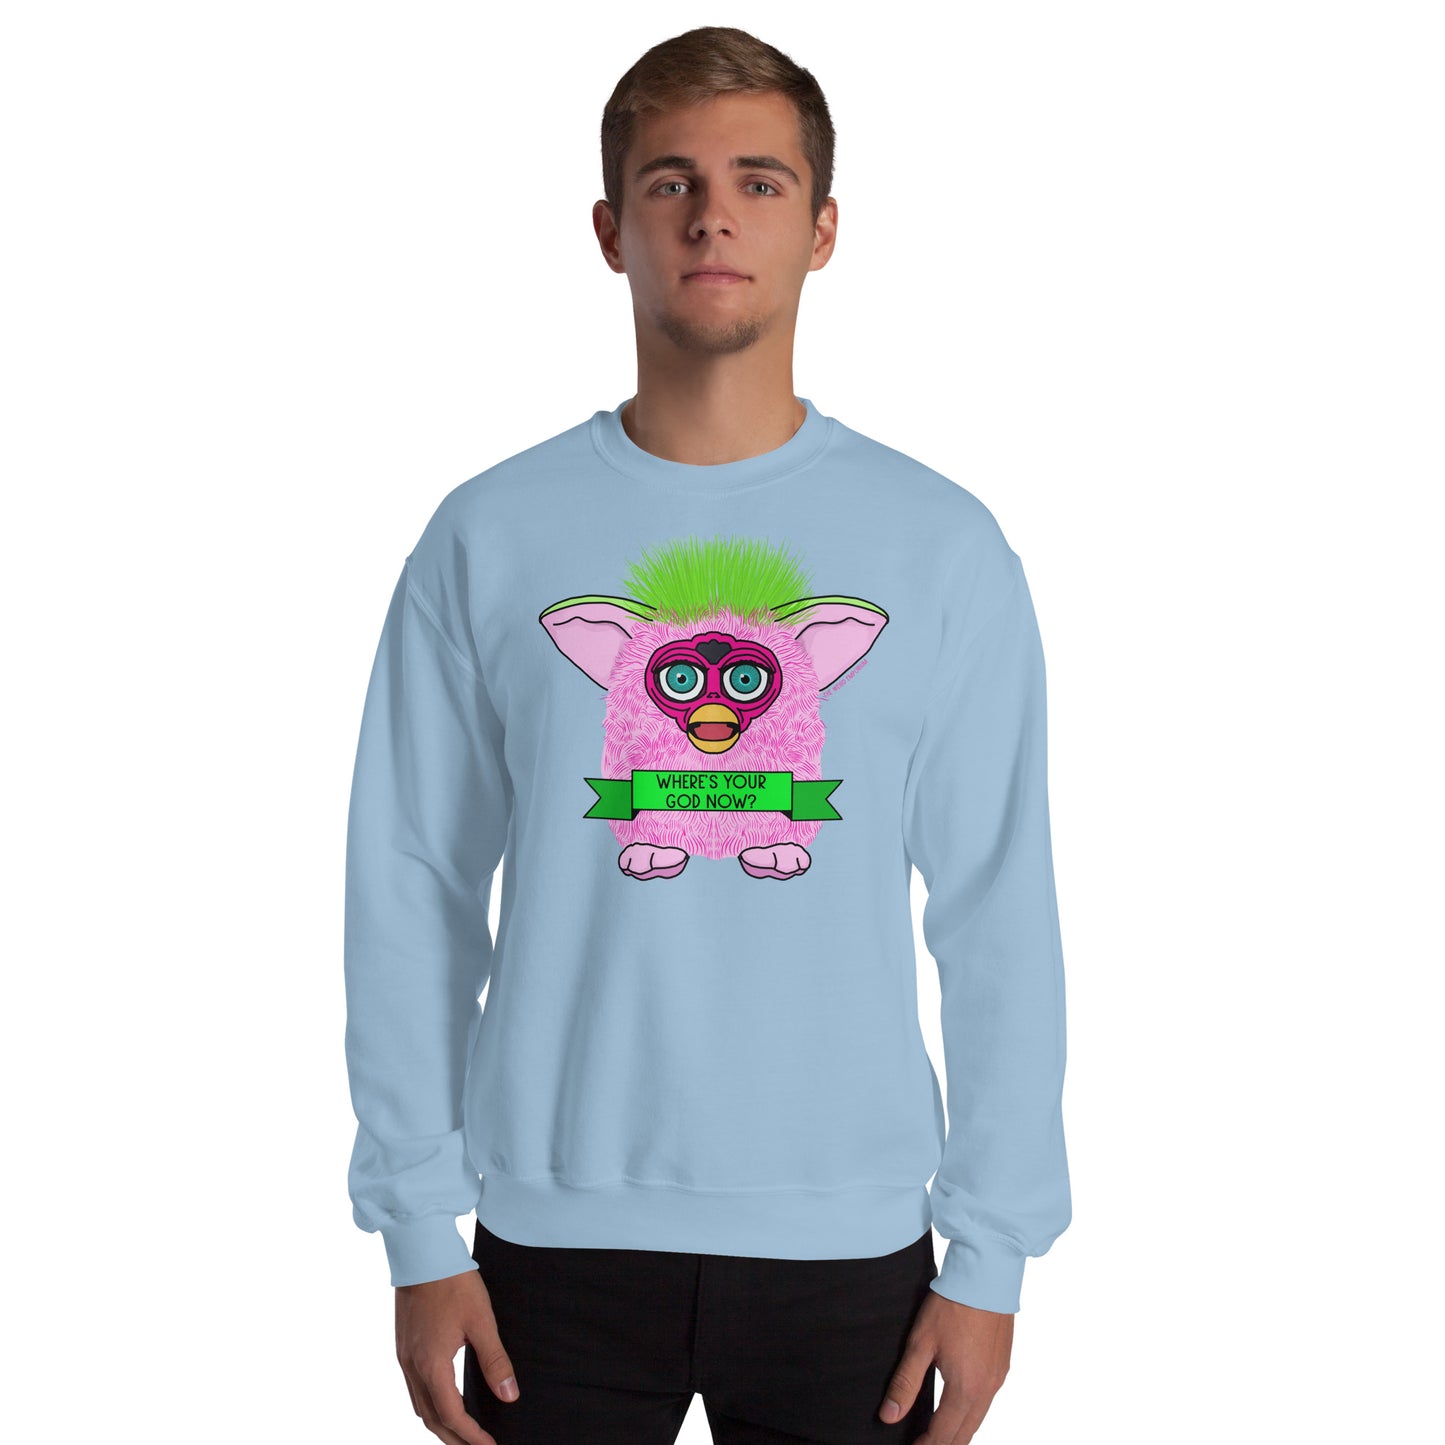 Furby - Where's Your God Now? Sweatshirt